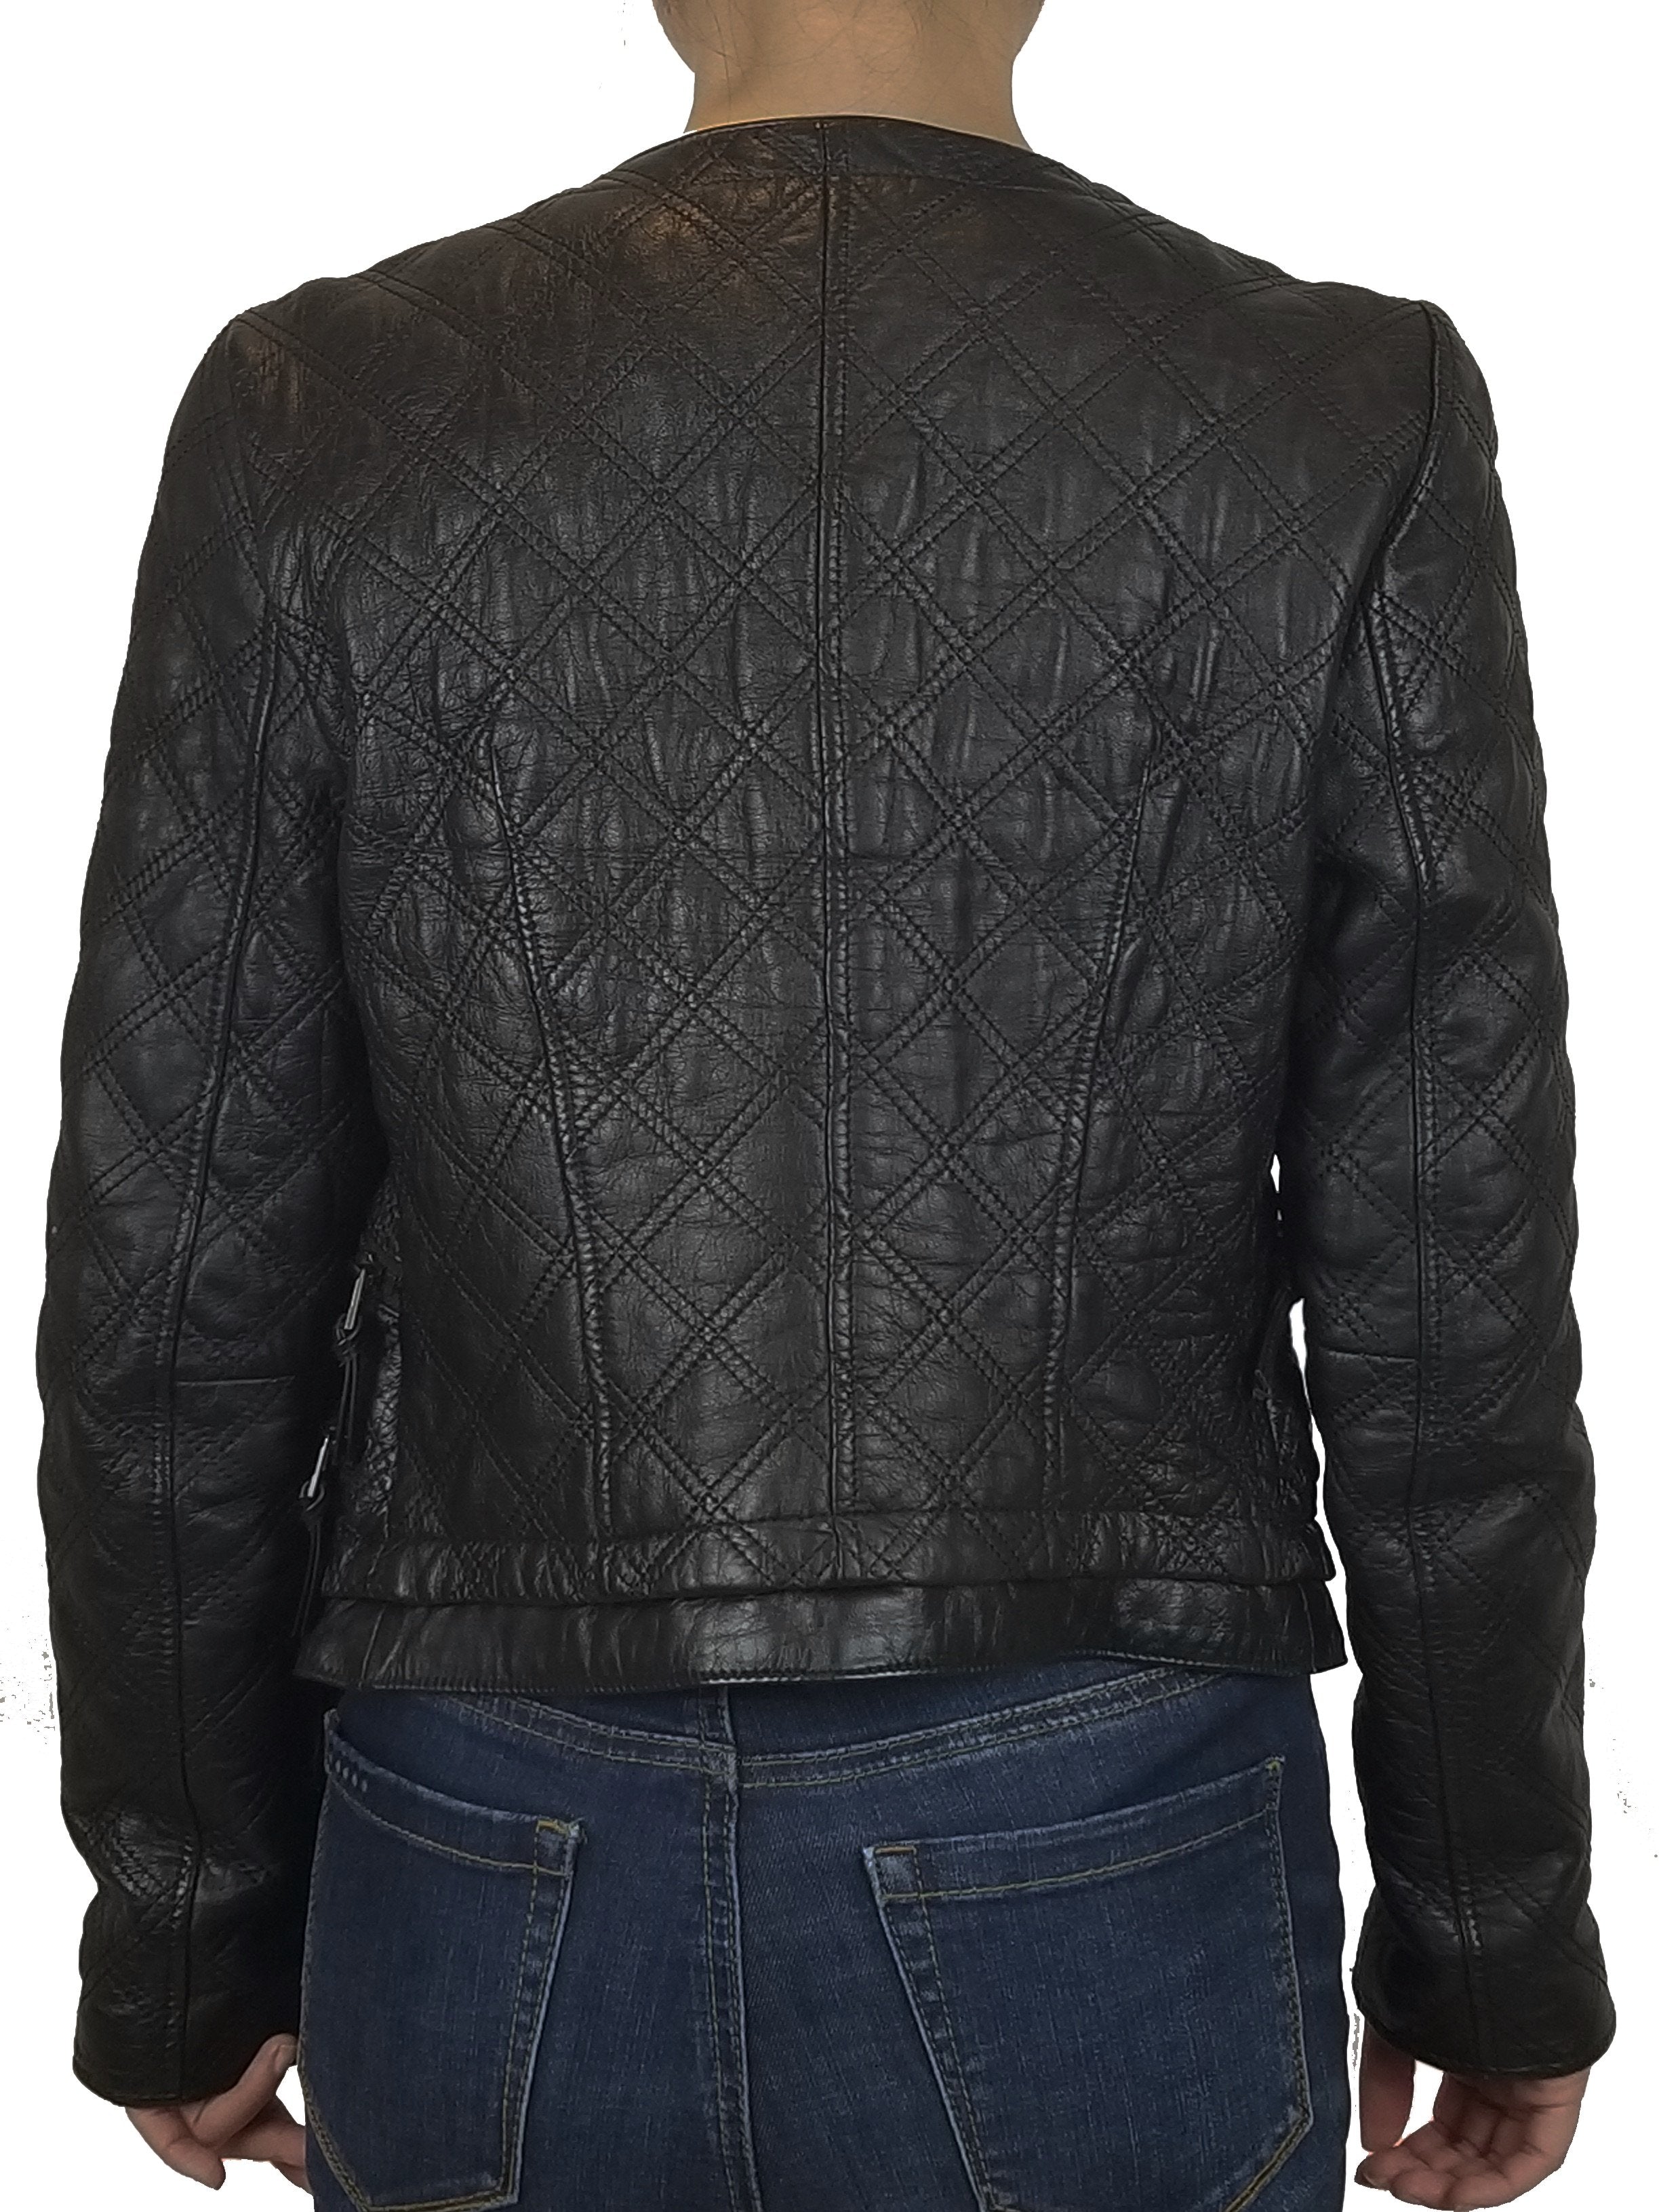 Zara Real Leather Jacket, Let your confidence shine through a kickass leather jacket., Black, 100% Leather, jacket, women's vintage leather jacket, women's designer leather jacket, women's black leather jacket, fashion